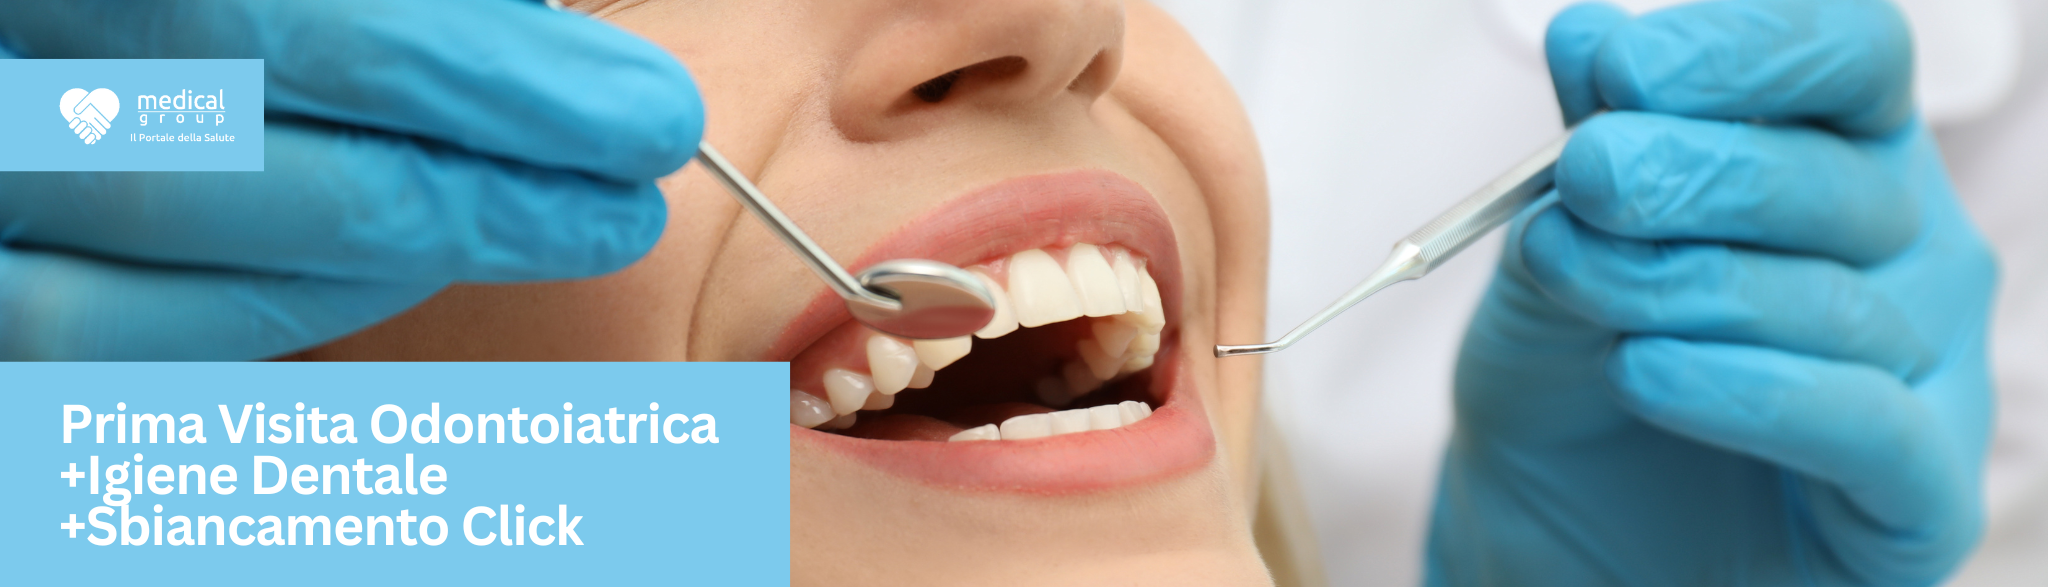 F-Medical Promo Foto Odontoiatria - Prima Visita Odontoiatrica +Igiene Dentale +Sbiancamento Click